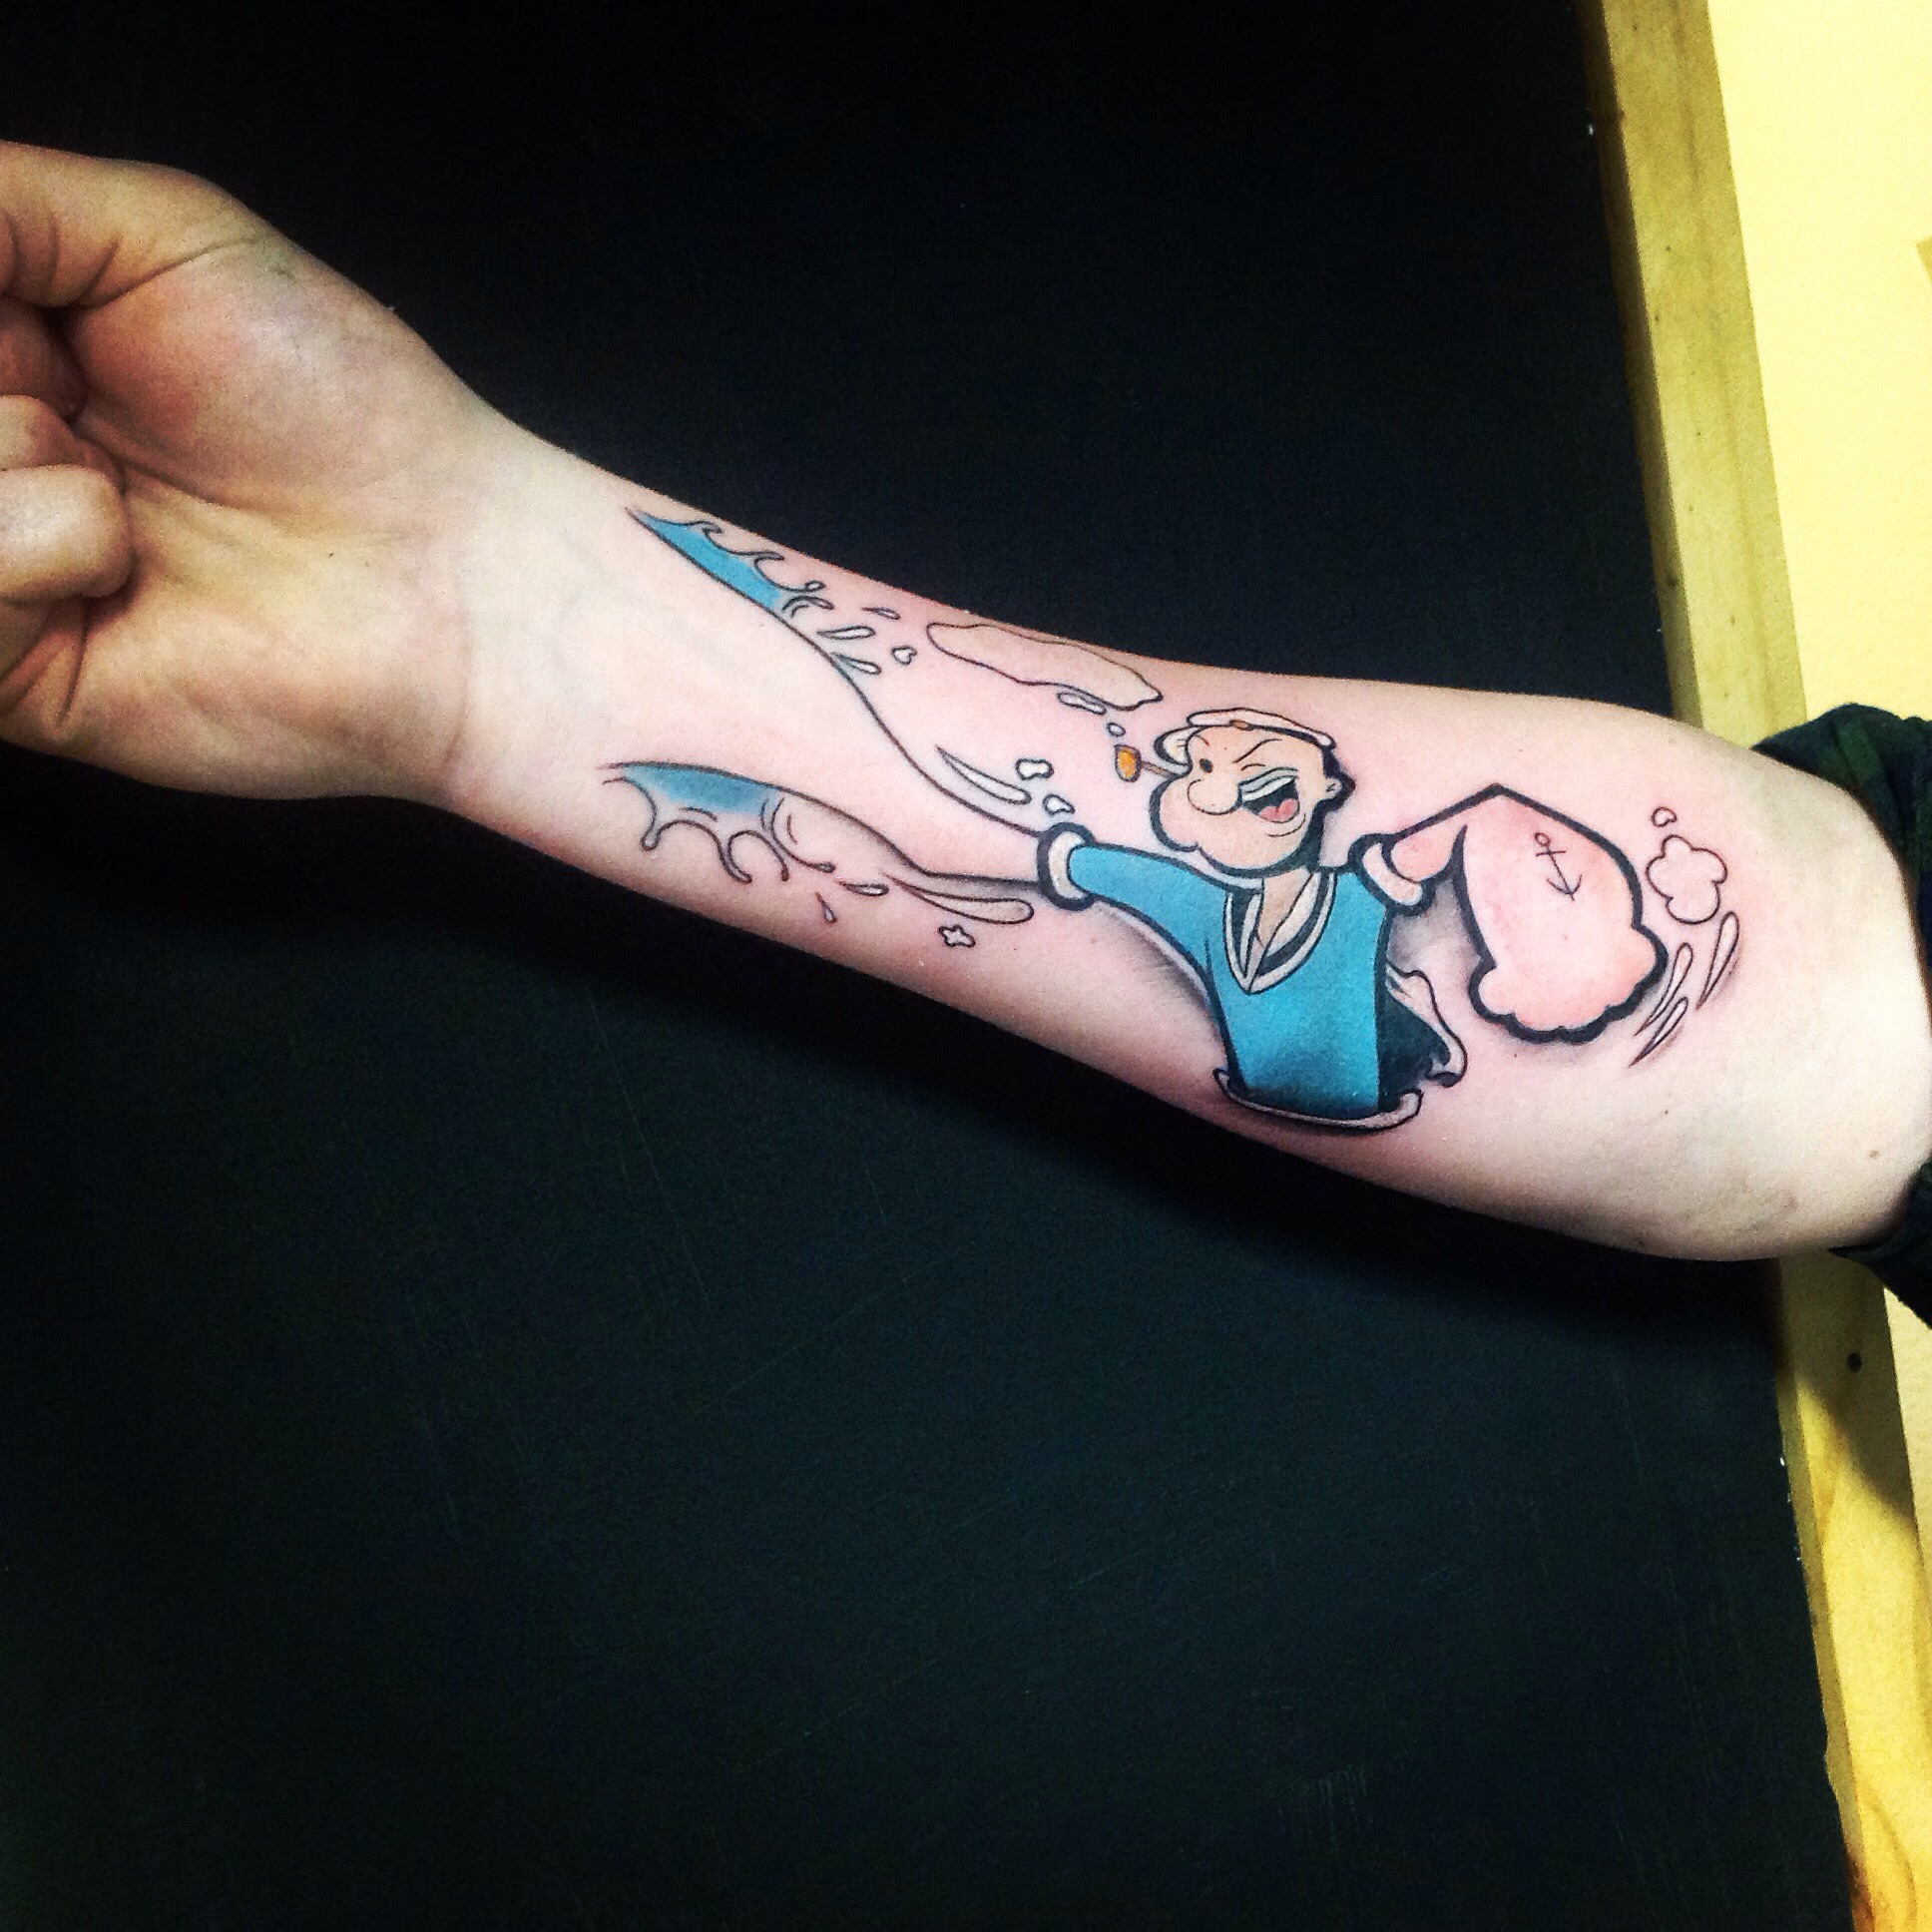 Popeye Tattoo on Arm.